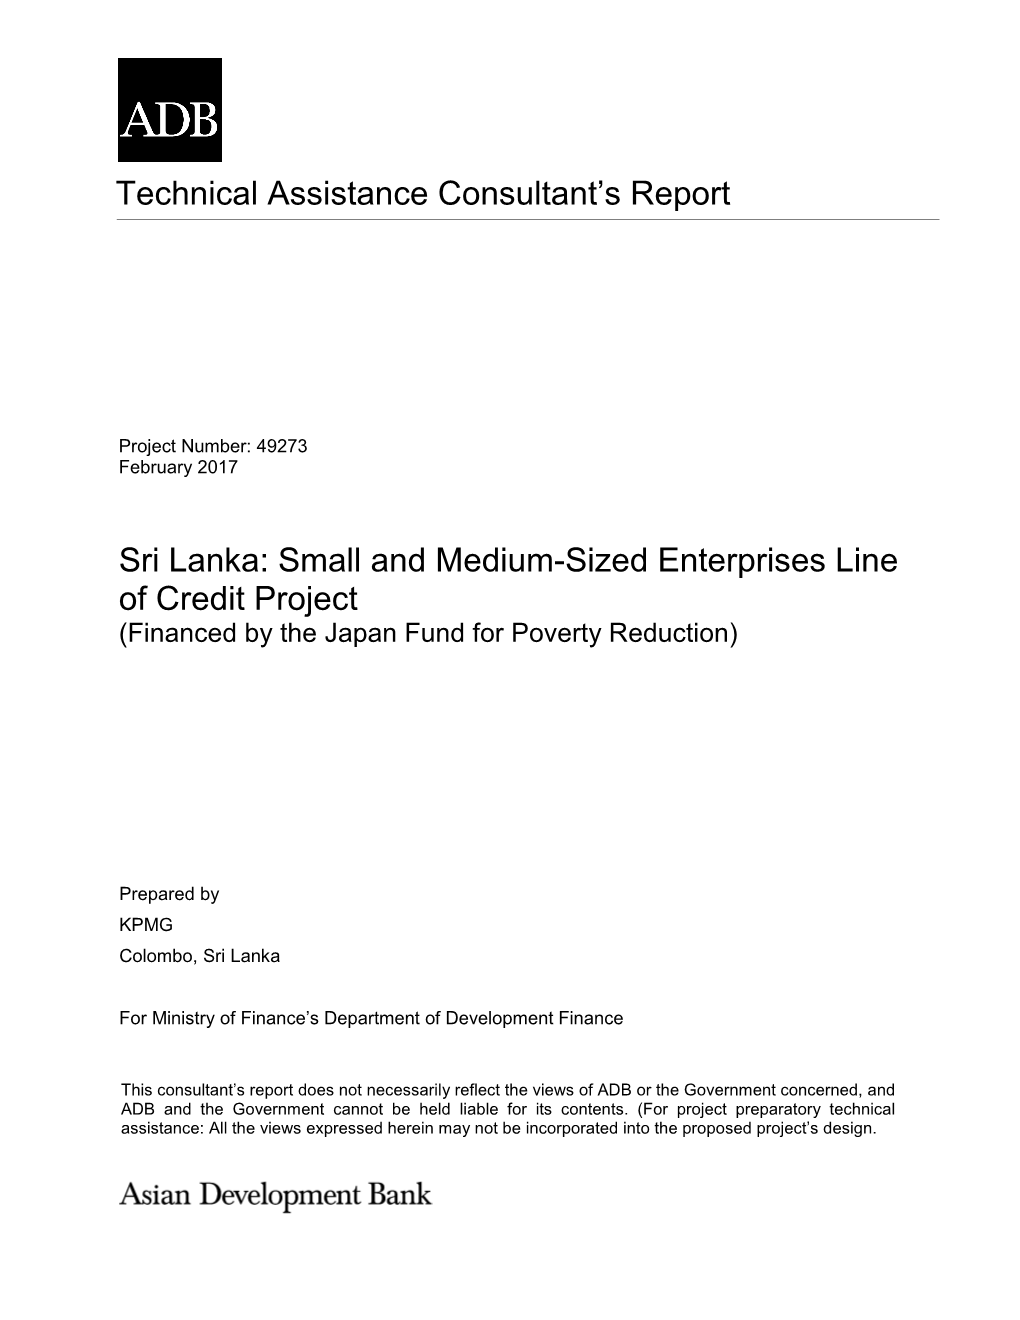 Technical Assistance Consultant's Report Sri Lanka